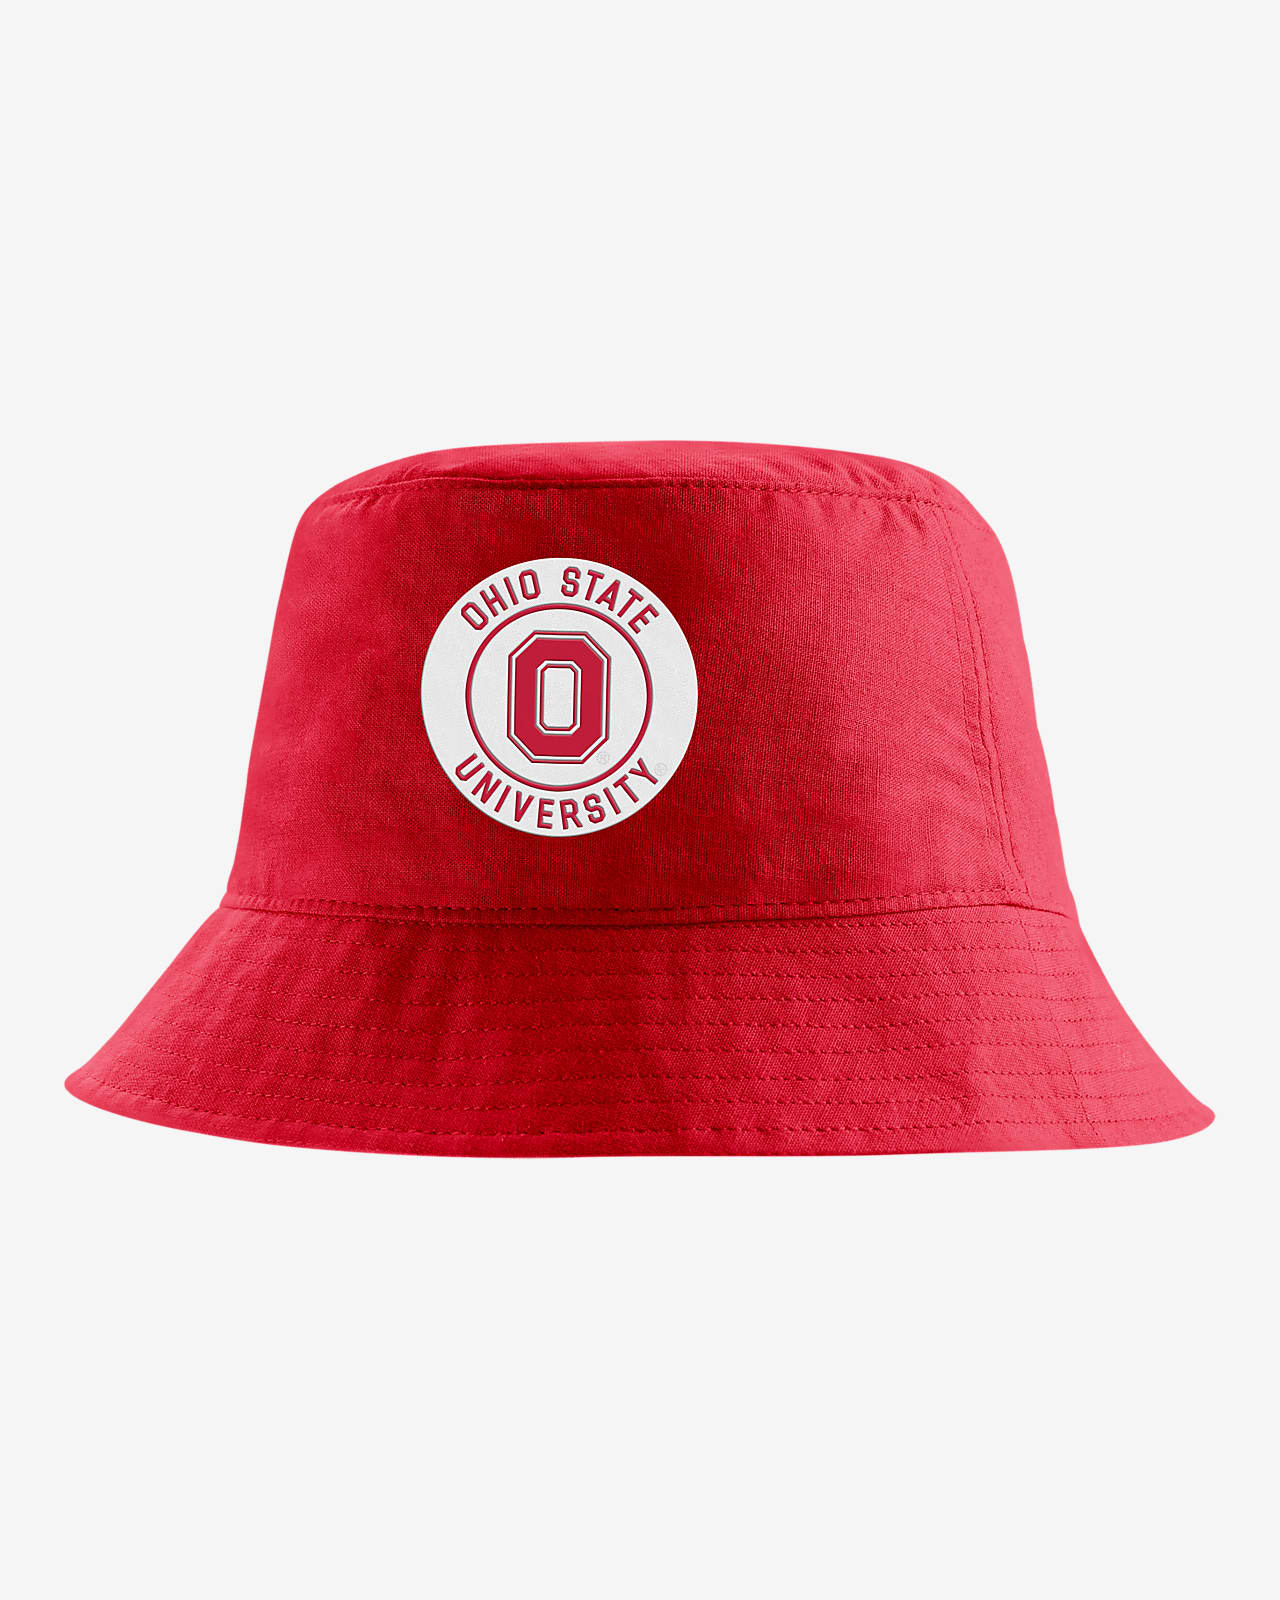 Ohio State Nike College Bucket Hat